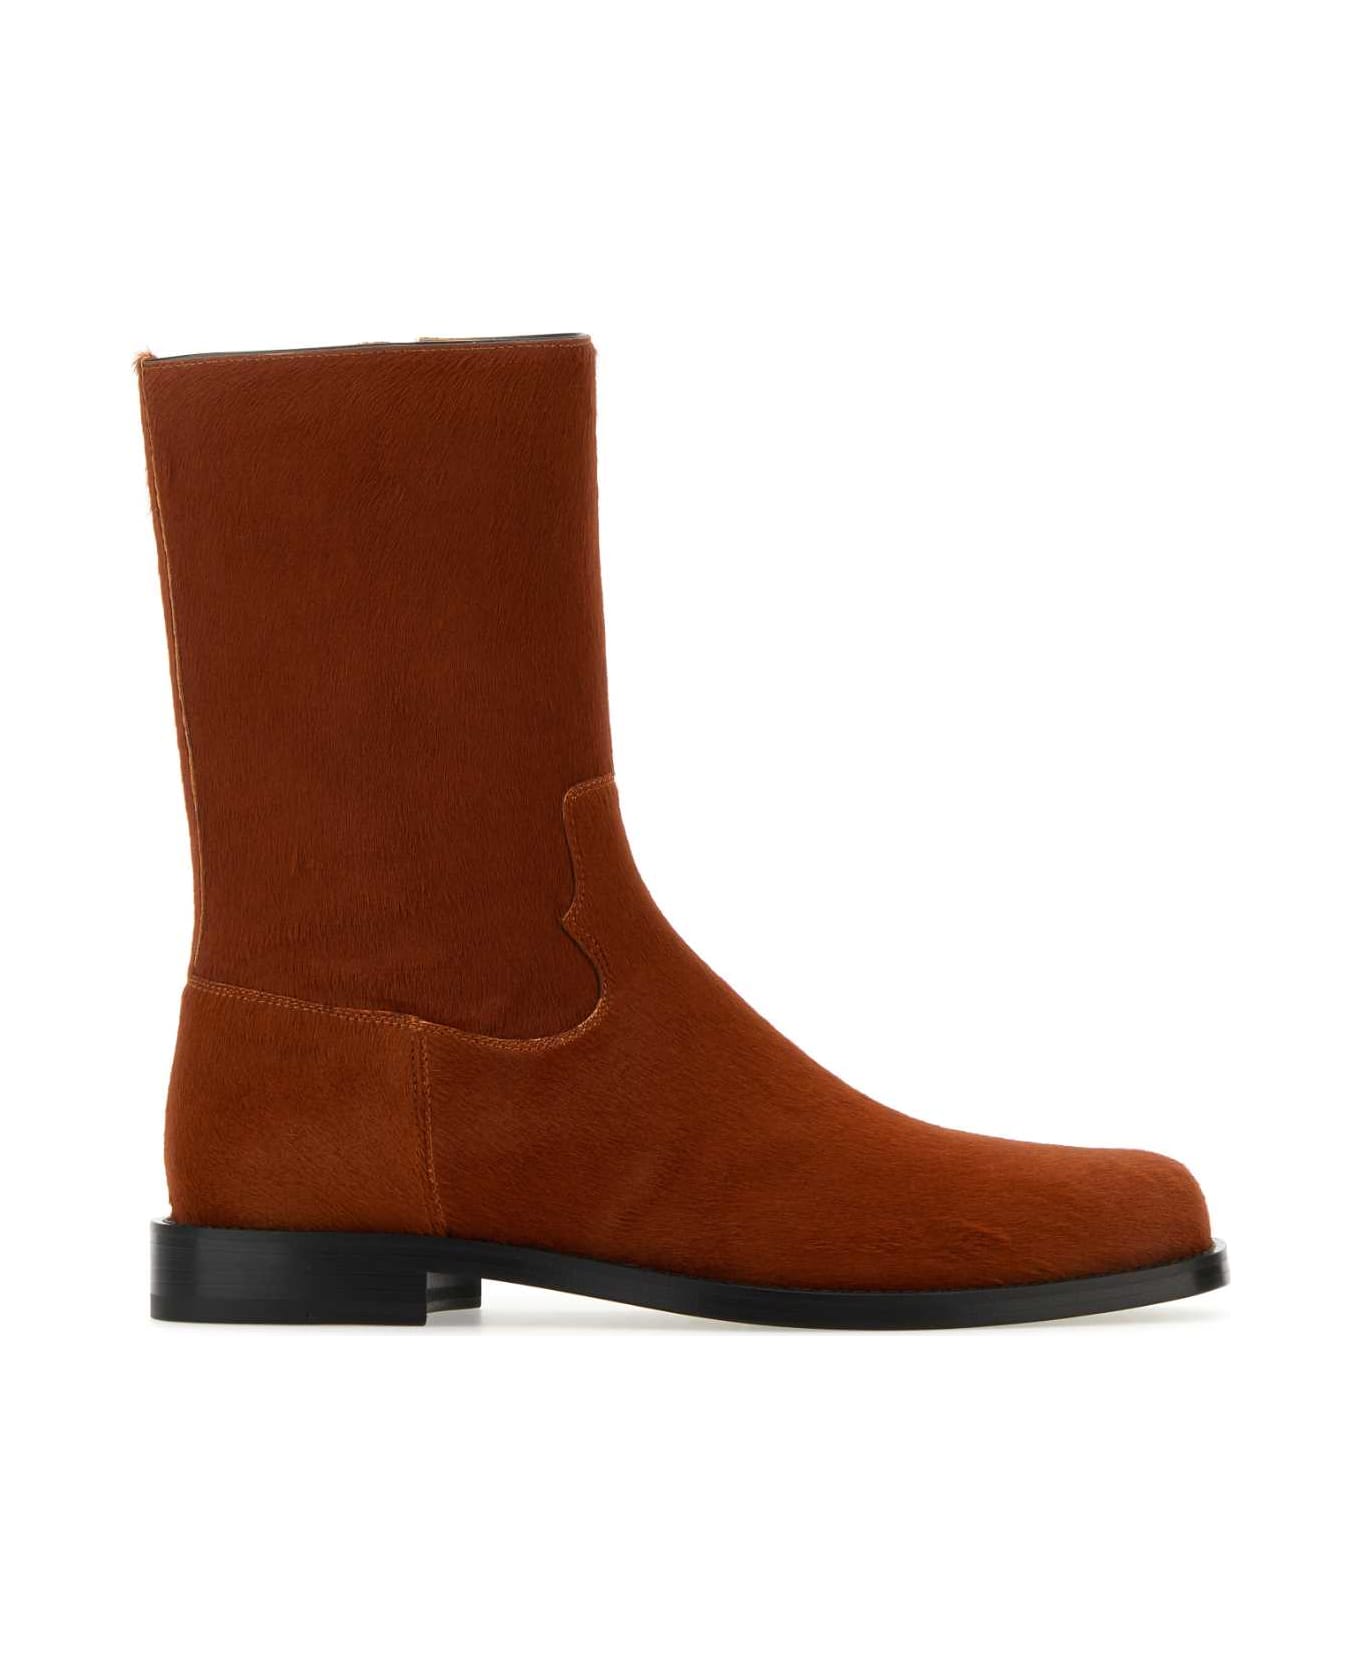 Dries Van Noten Brick Calfhair Ankle Boots - TAN